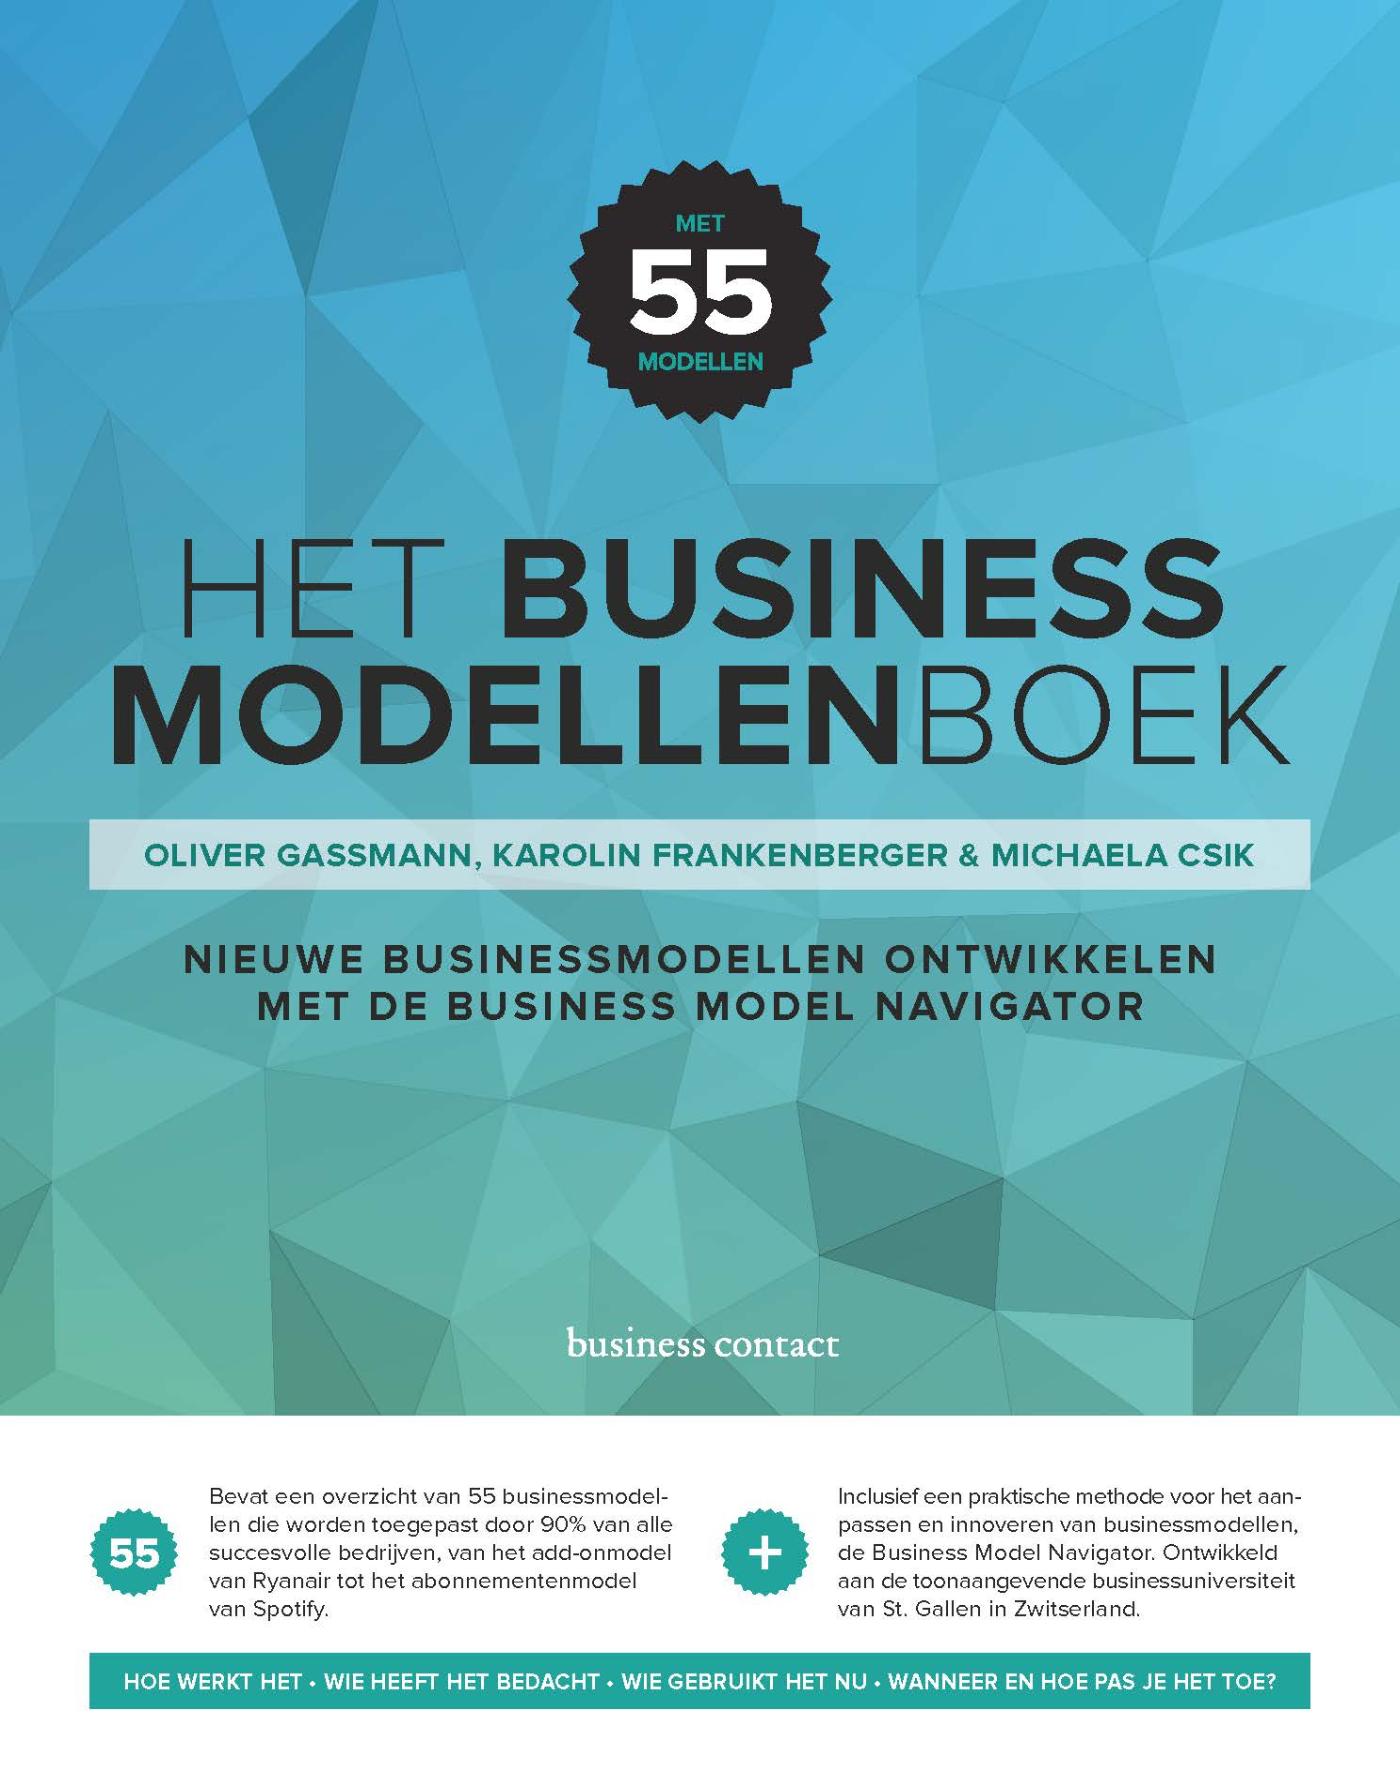 Het businessmodellenboek (Ebook)